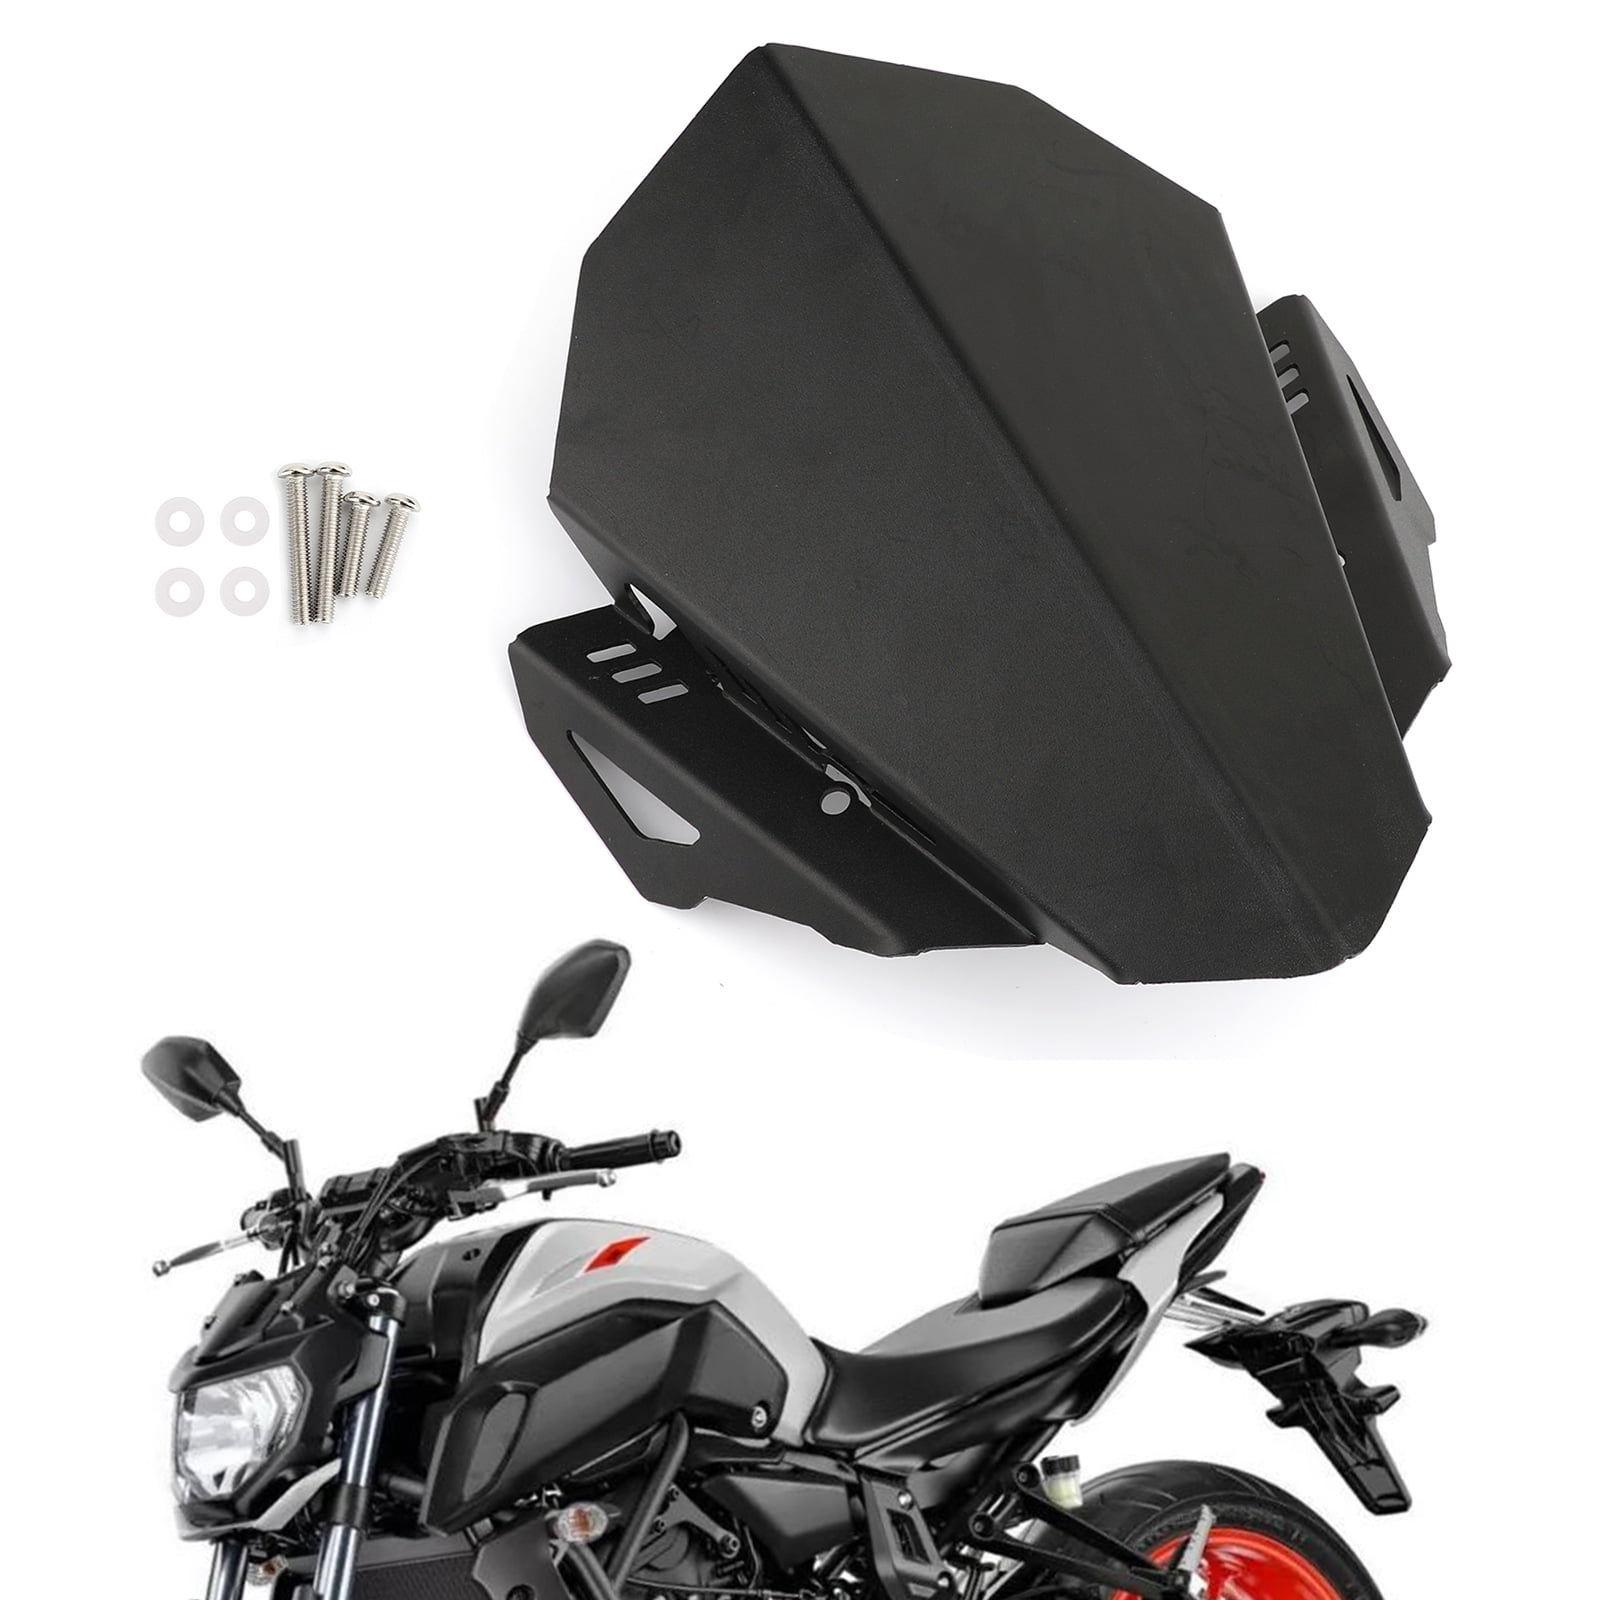 Moto Windscreen For cupula moto vmax 1200 triumph bonneville yamaha mt 03  Universial Motorcycle Windshield Deflector Cafe